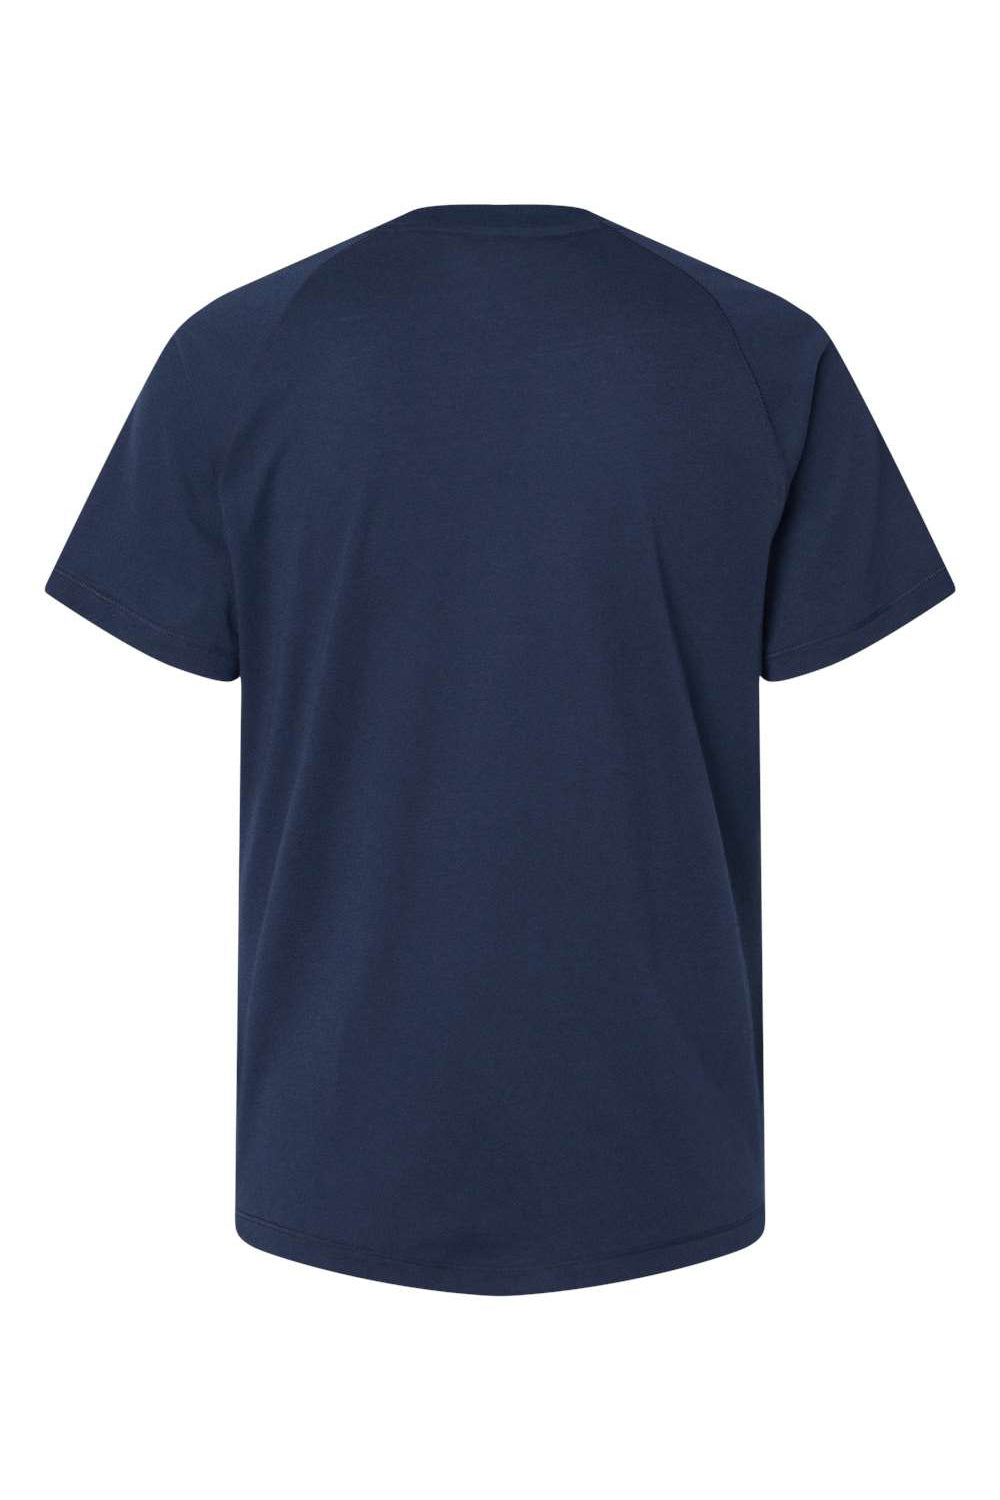 Adidas A557 Womens Short Sleeve Crewneck T-Shirt Collegiate Navy Blue Flat Back